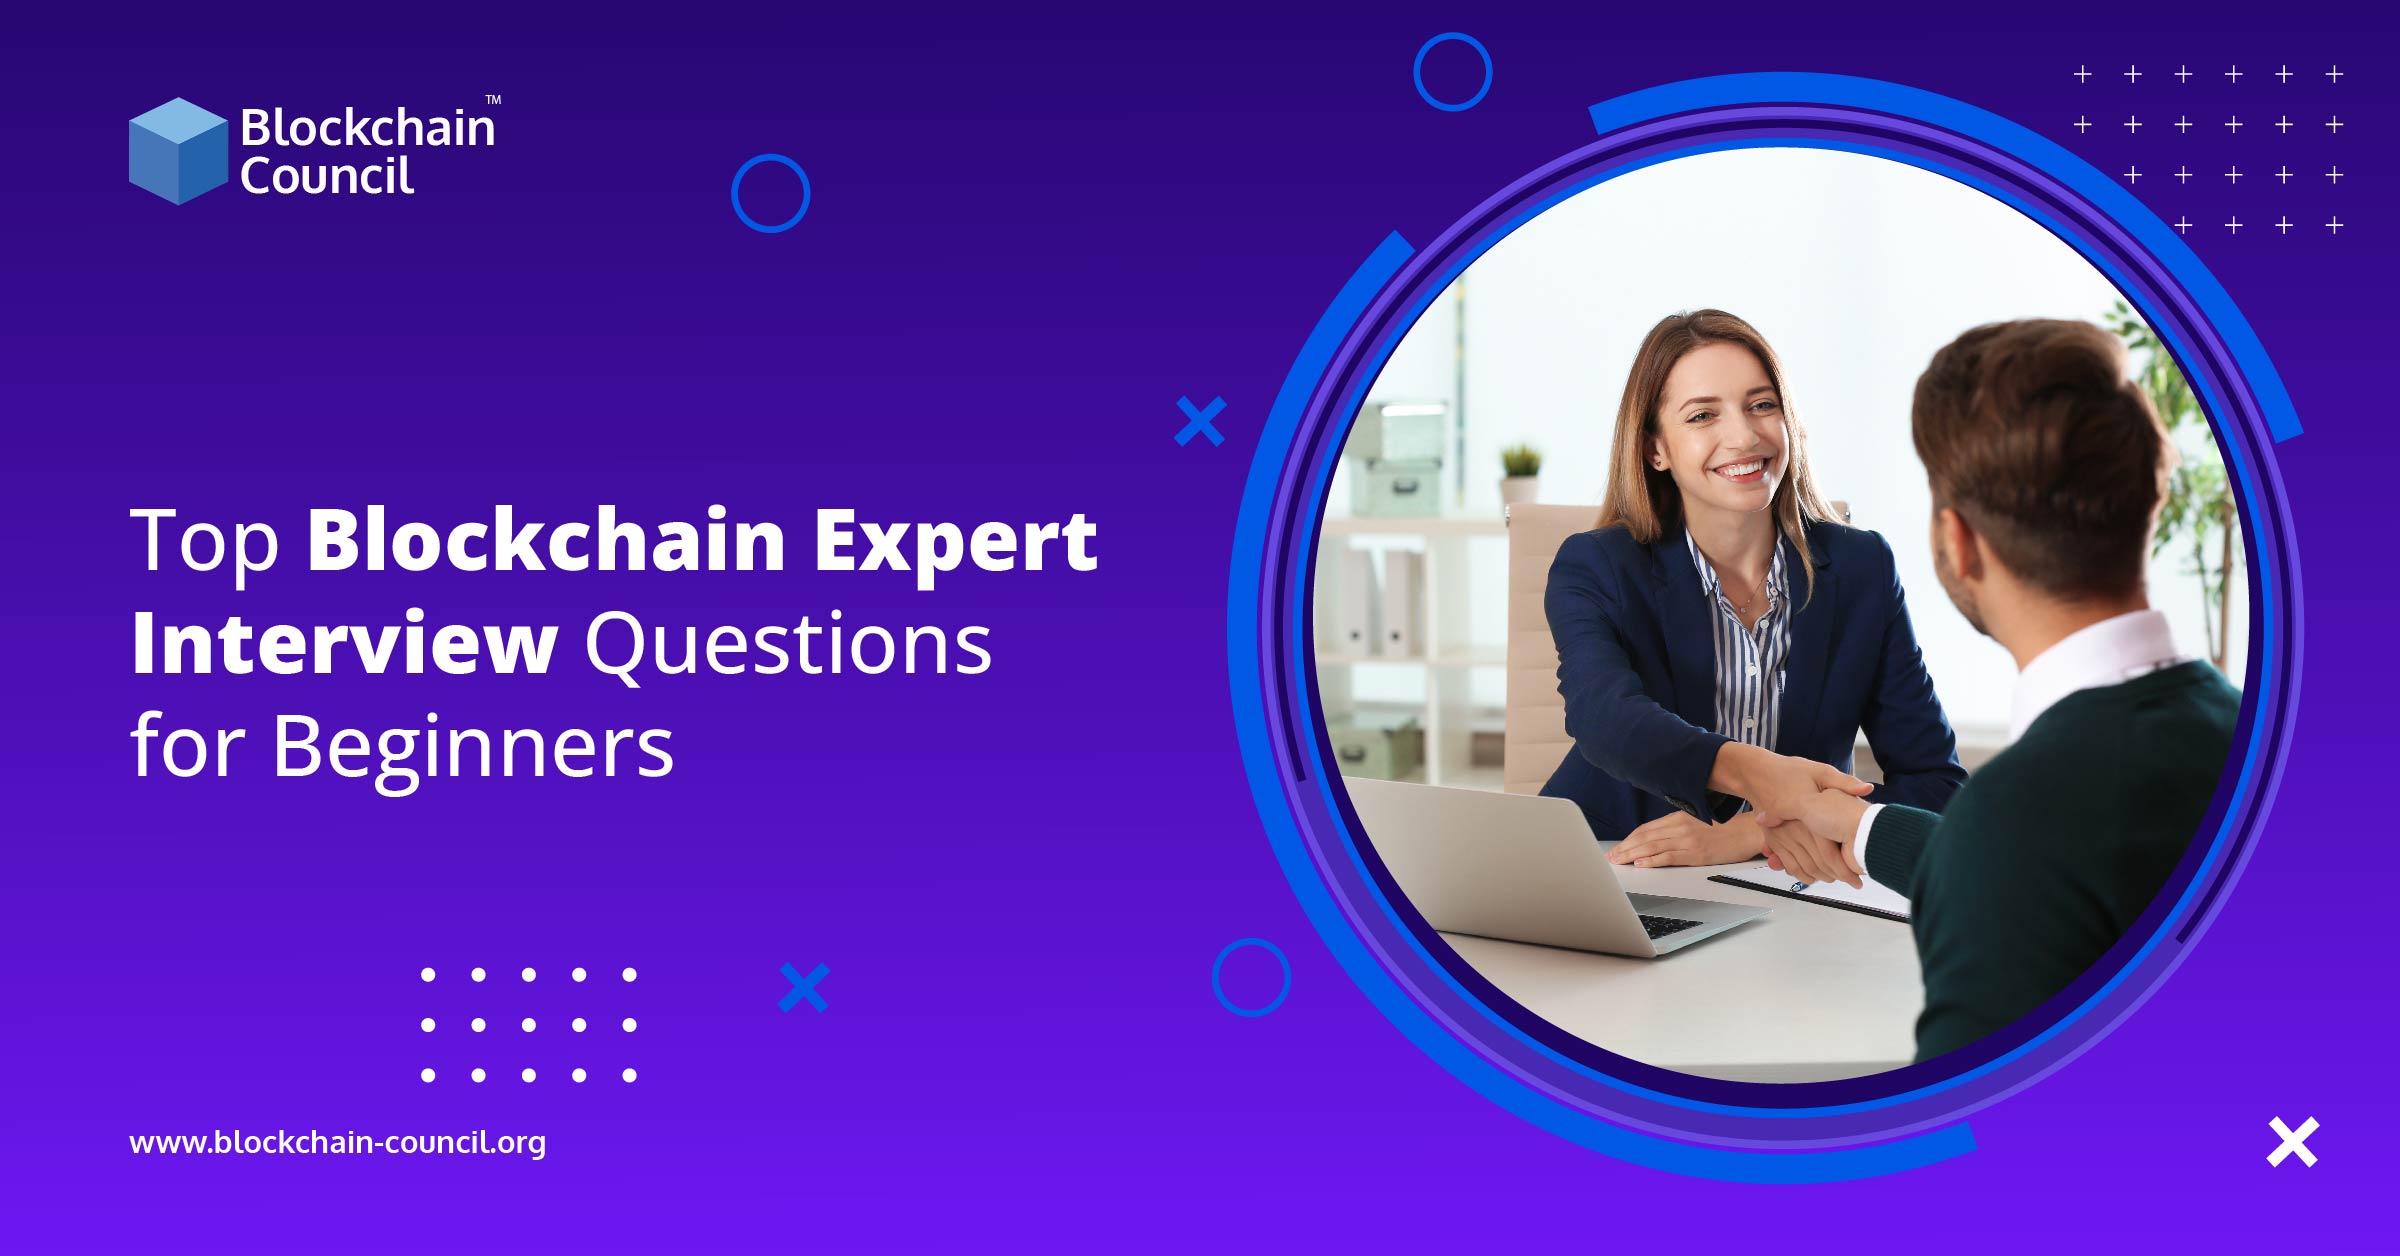 Top Blockchain Expert Interview Questions for Beginners